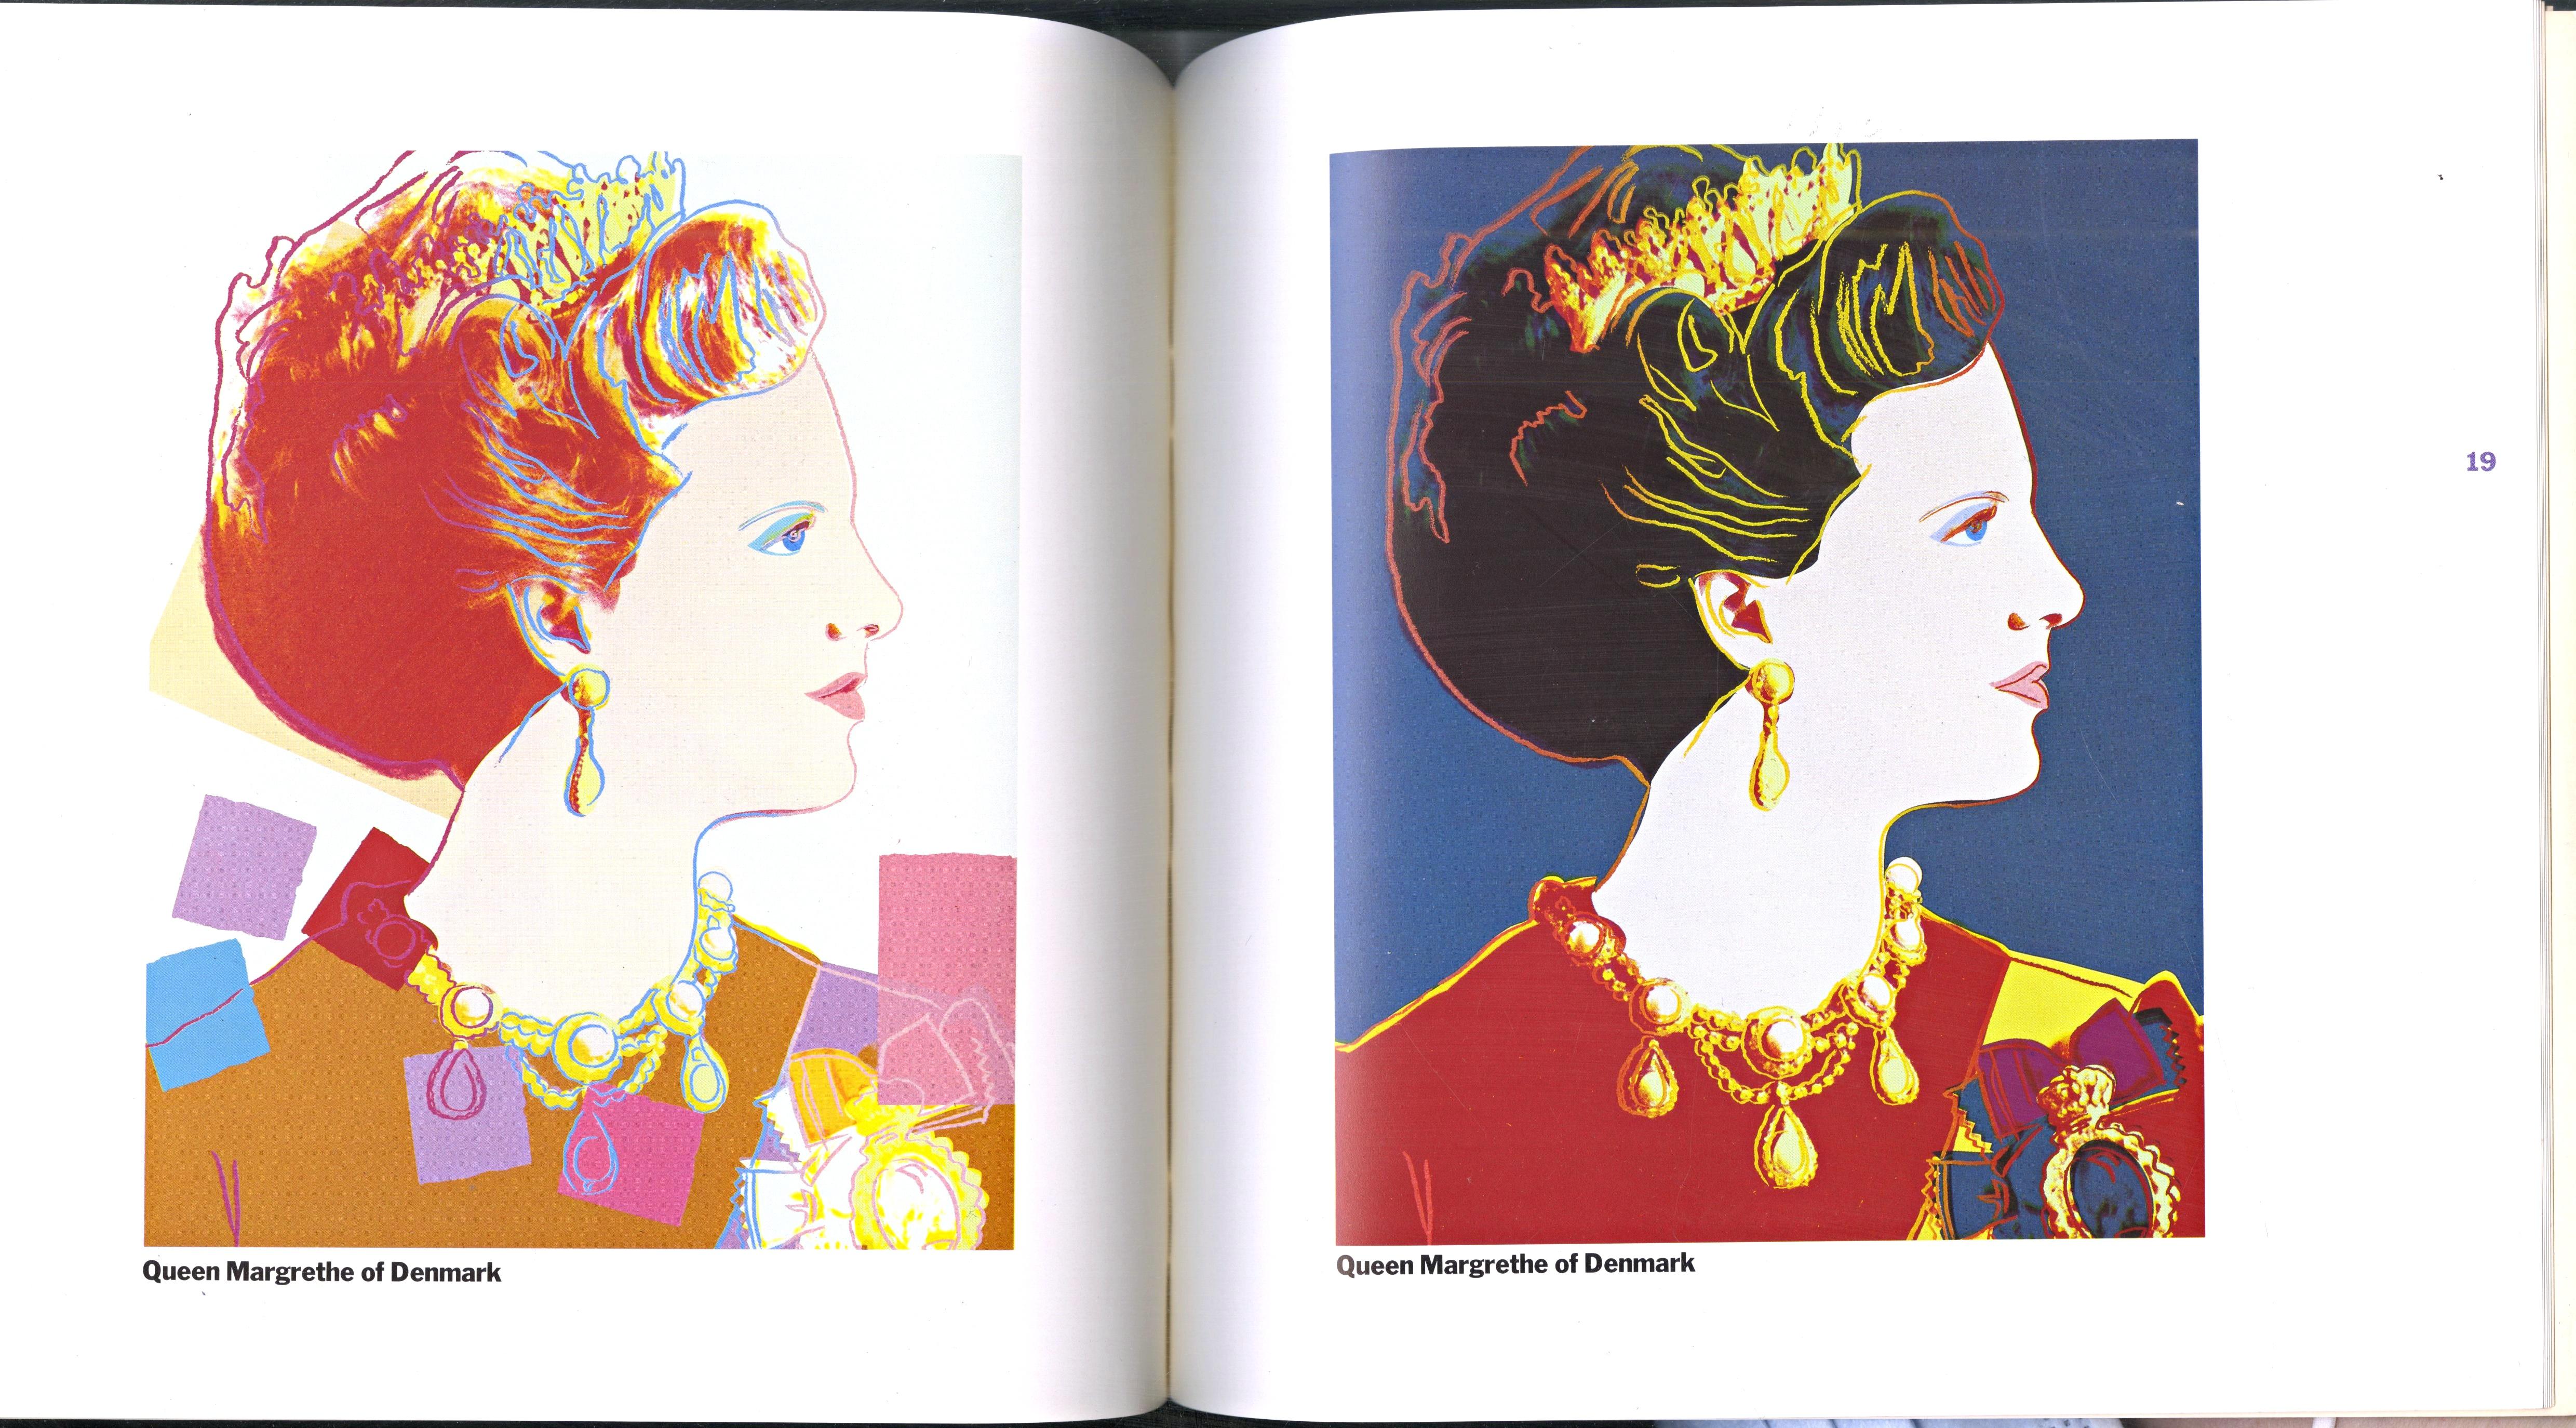 Reigning Queens (including Queen Elizabeth II)  - Gray Portrait Print by Andy Warhol